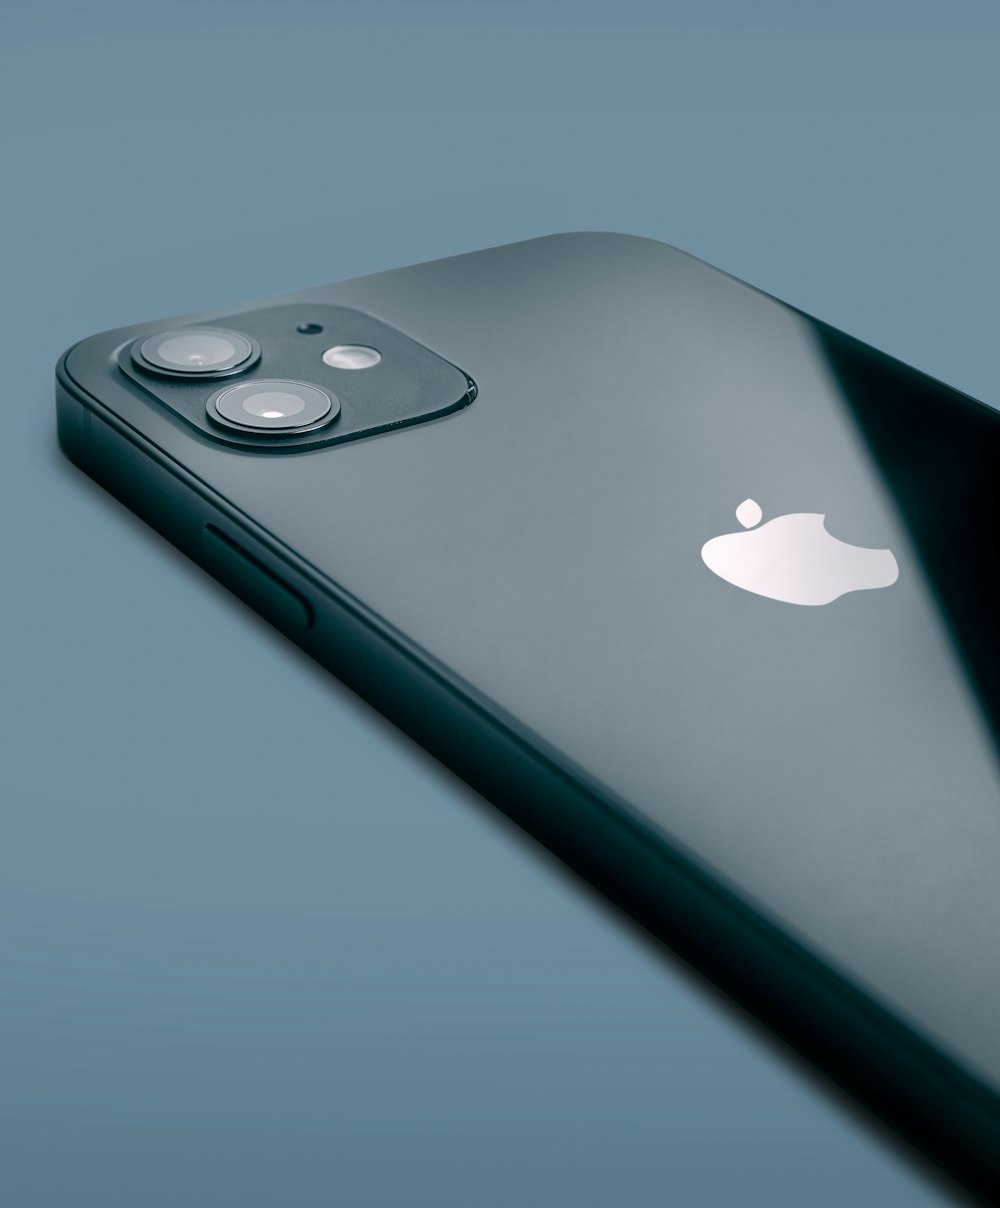 iphone 6 prata na superfície azul